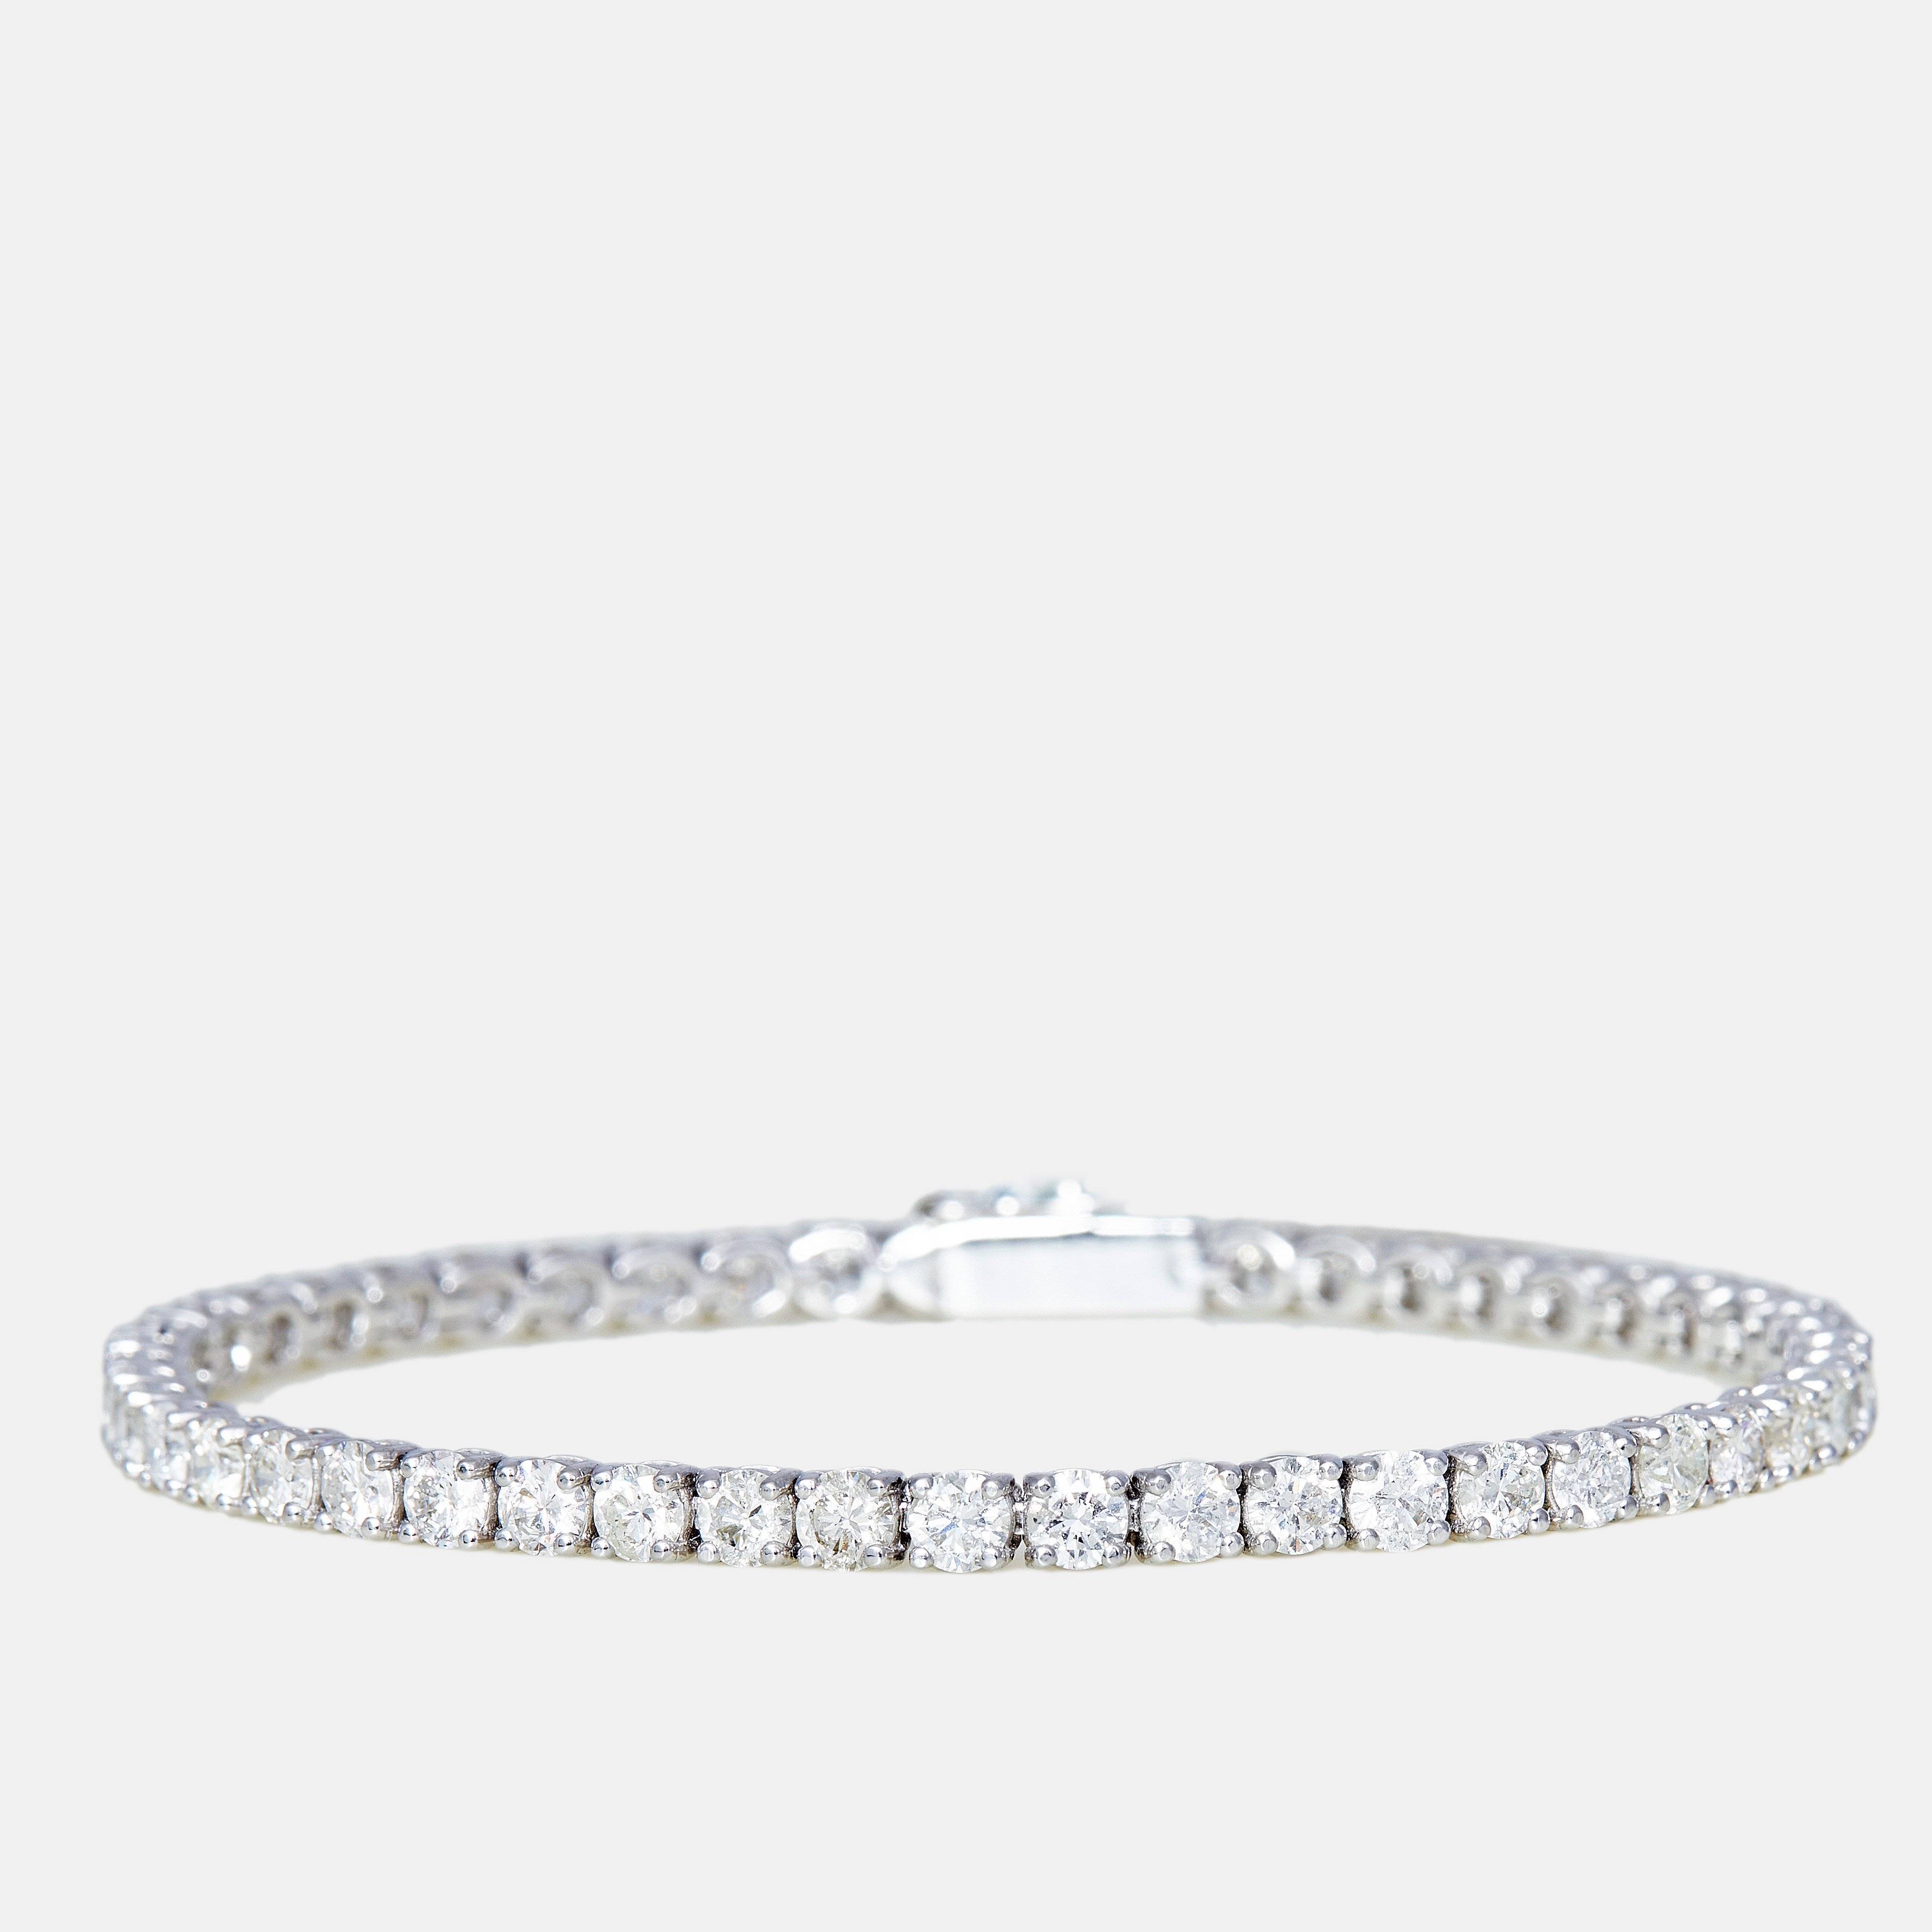 The diamond edit 18k white gold 7.35 ct diamond bracelet